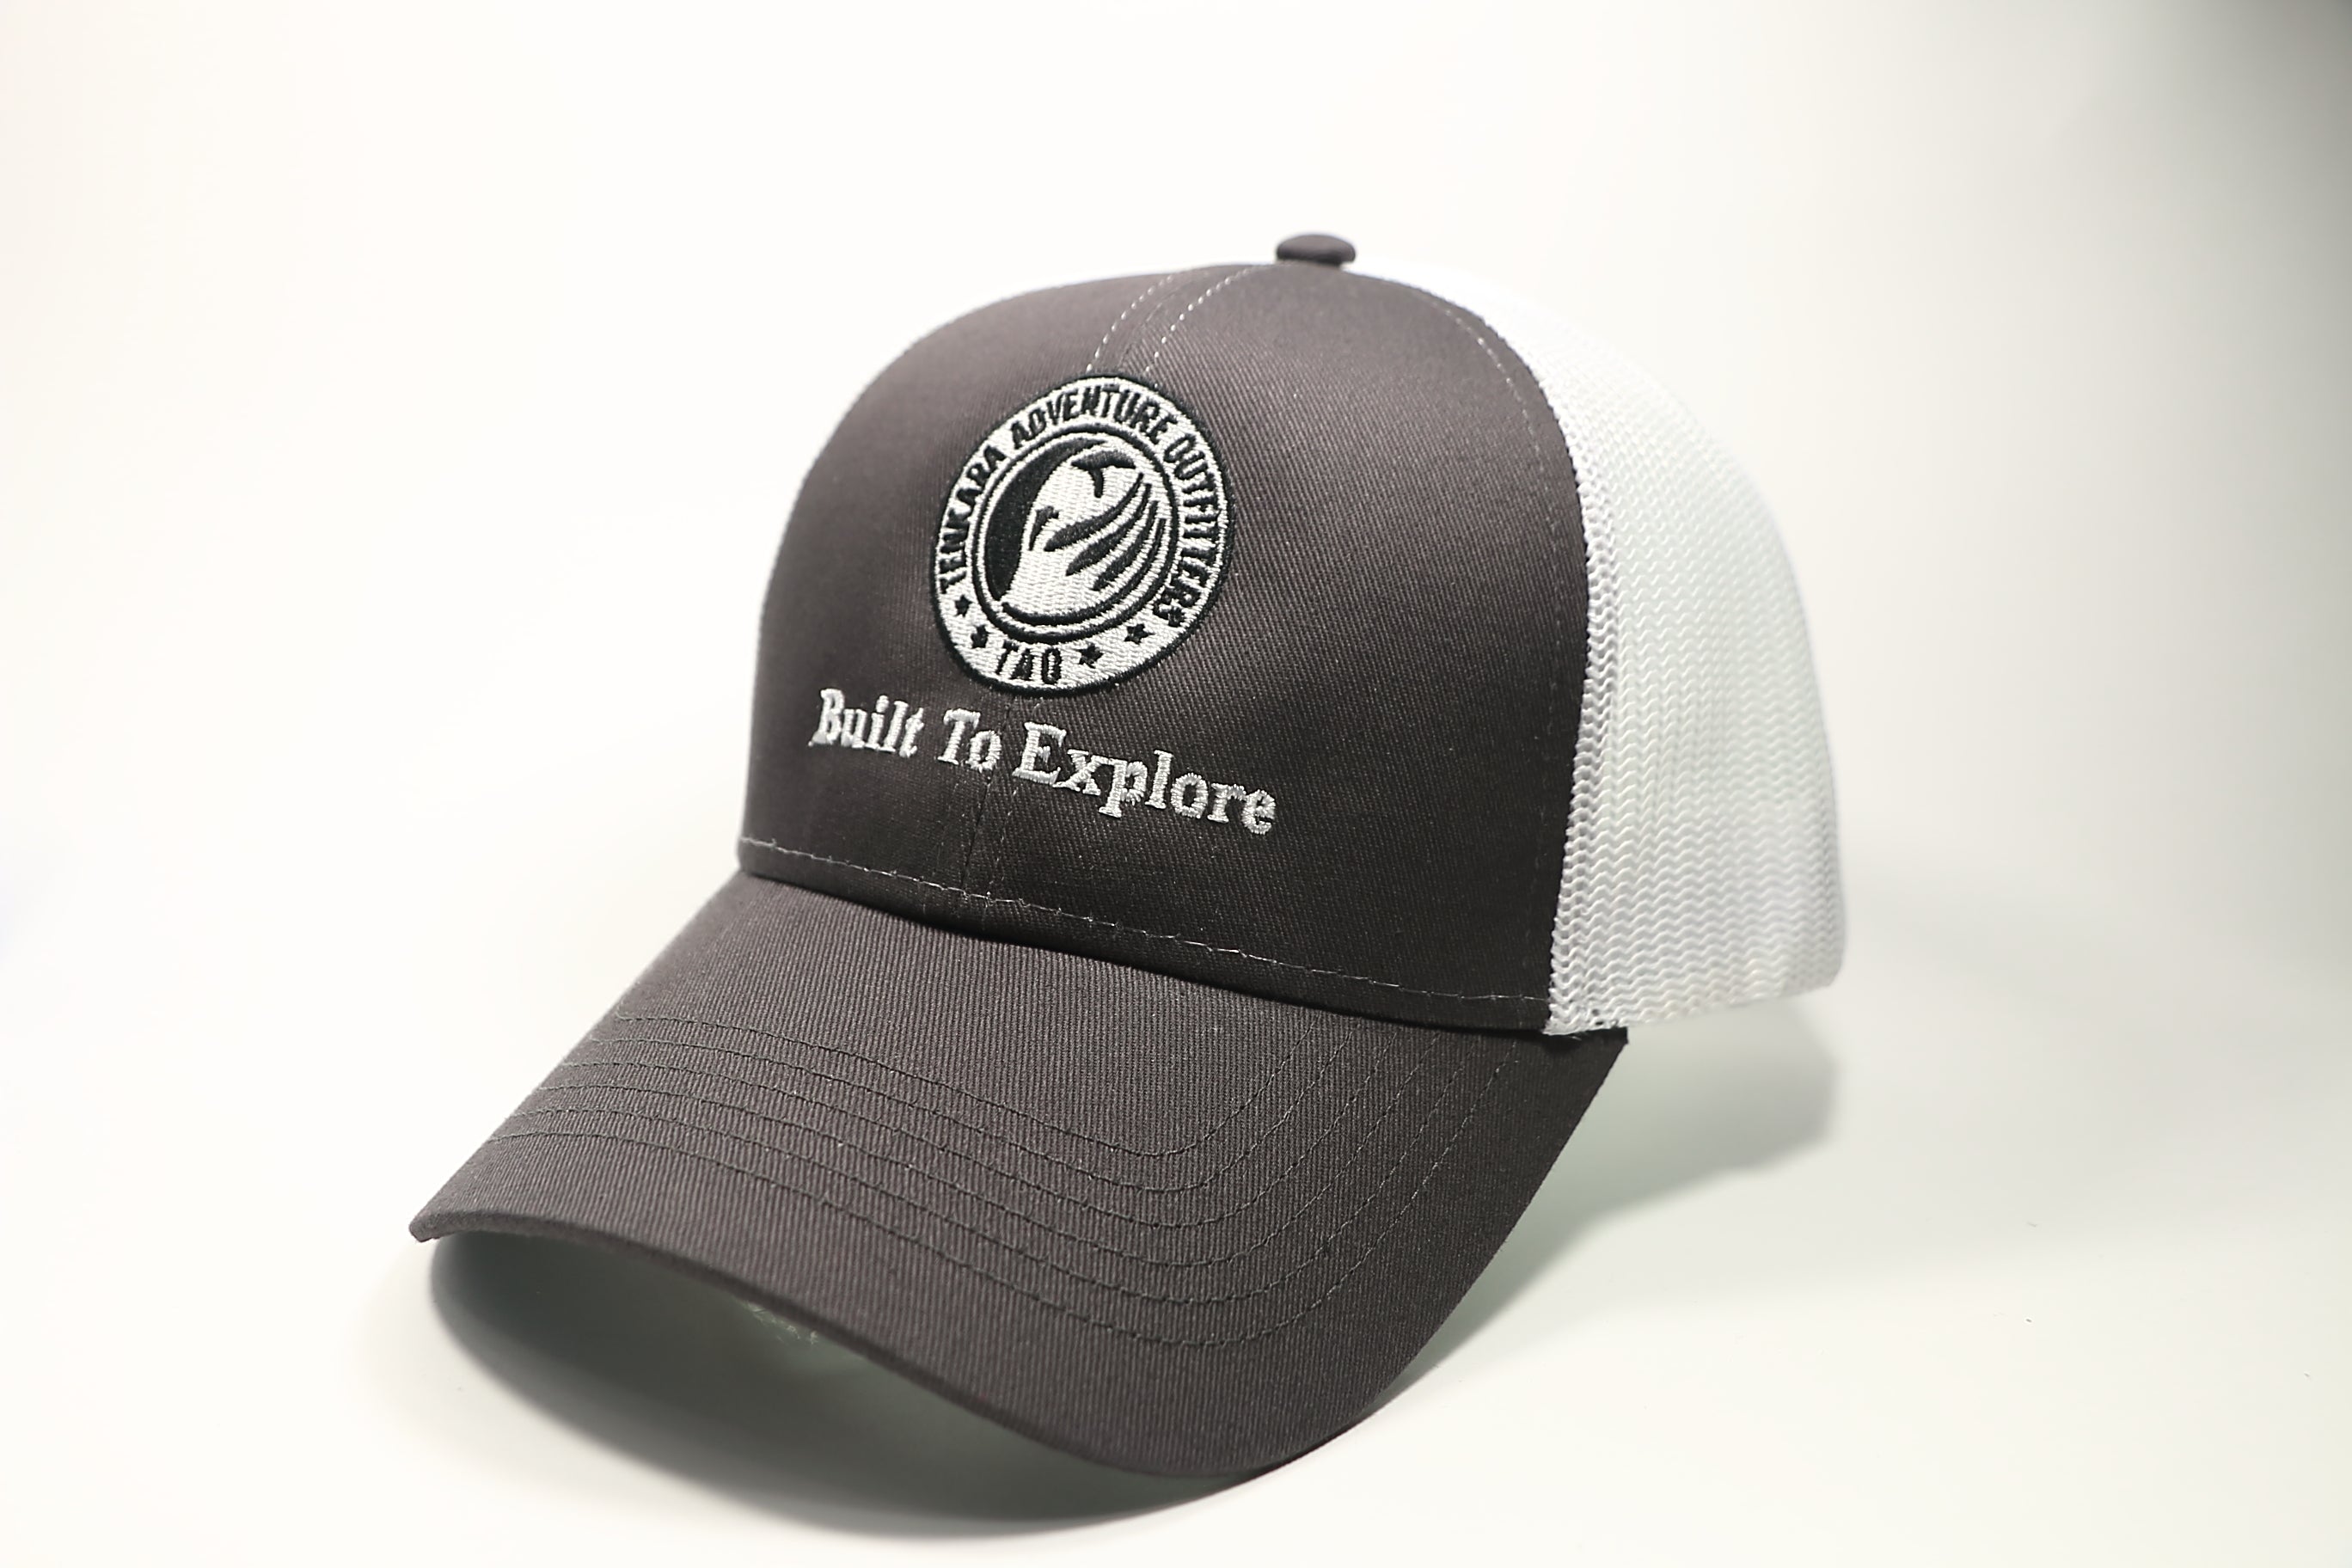 Built To Explore Hat